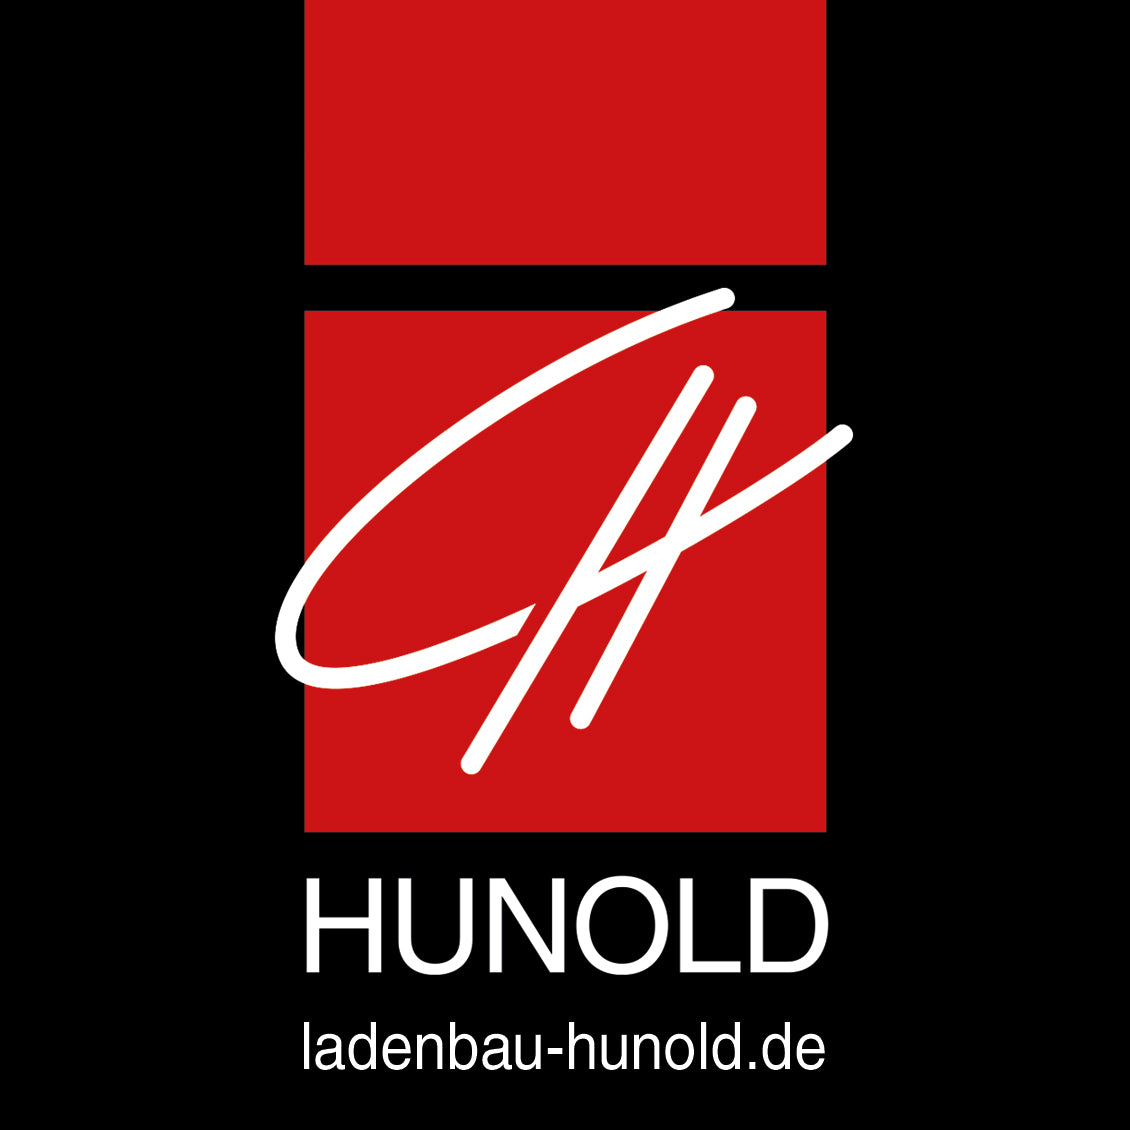 (c) Ladenbau-hunold.de